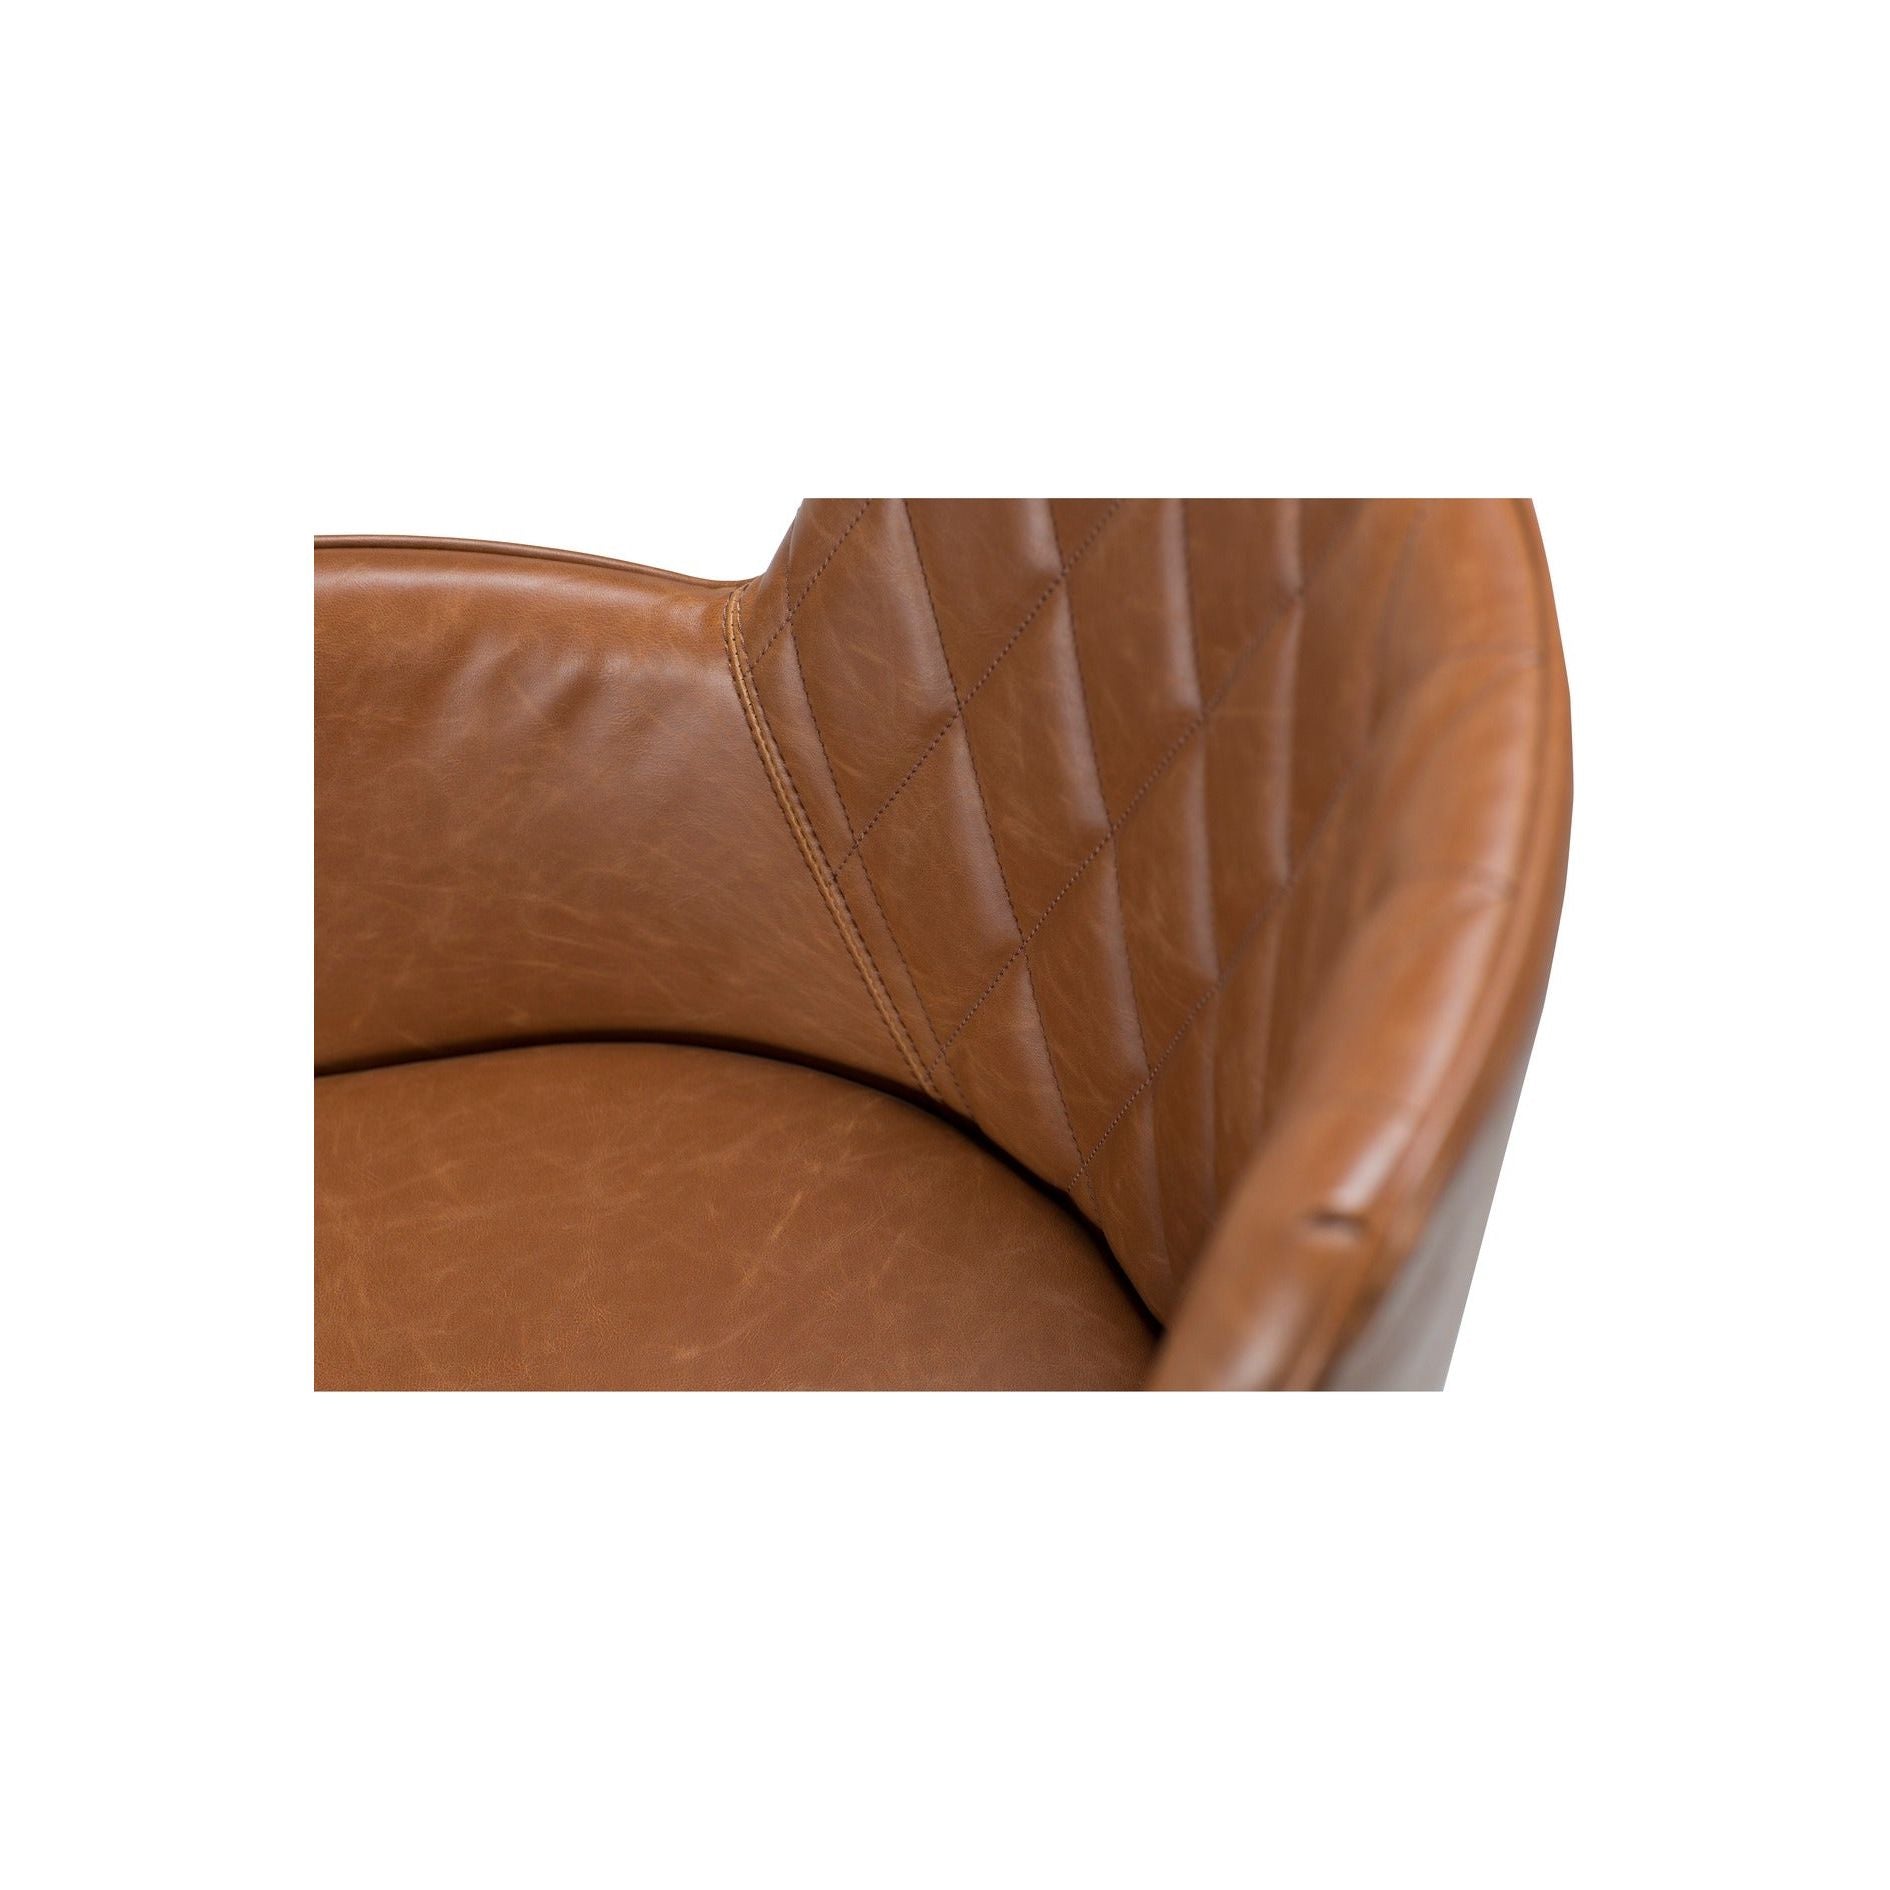 ROMBO fotelis, ruda spalva